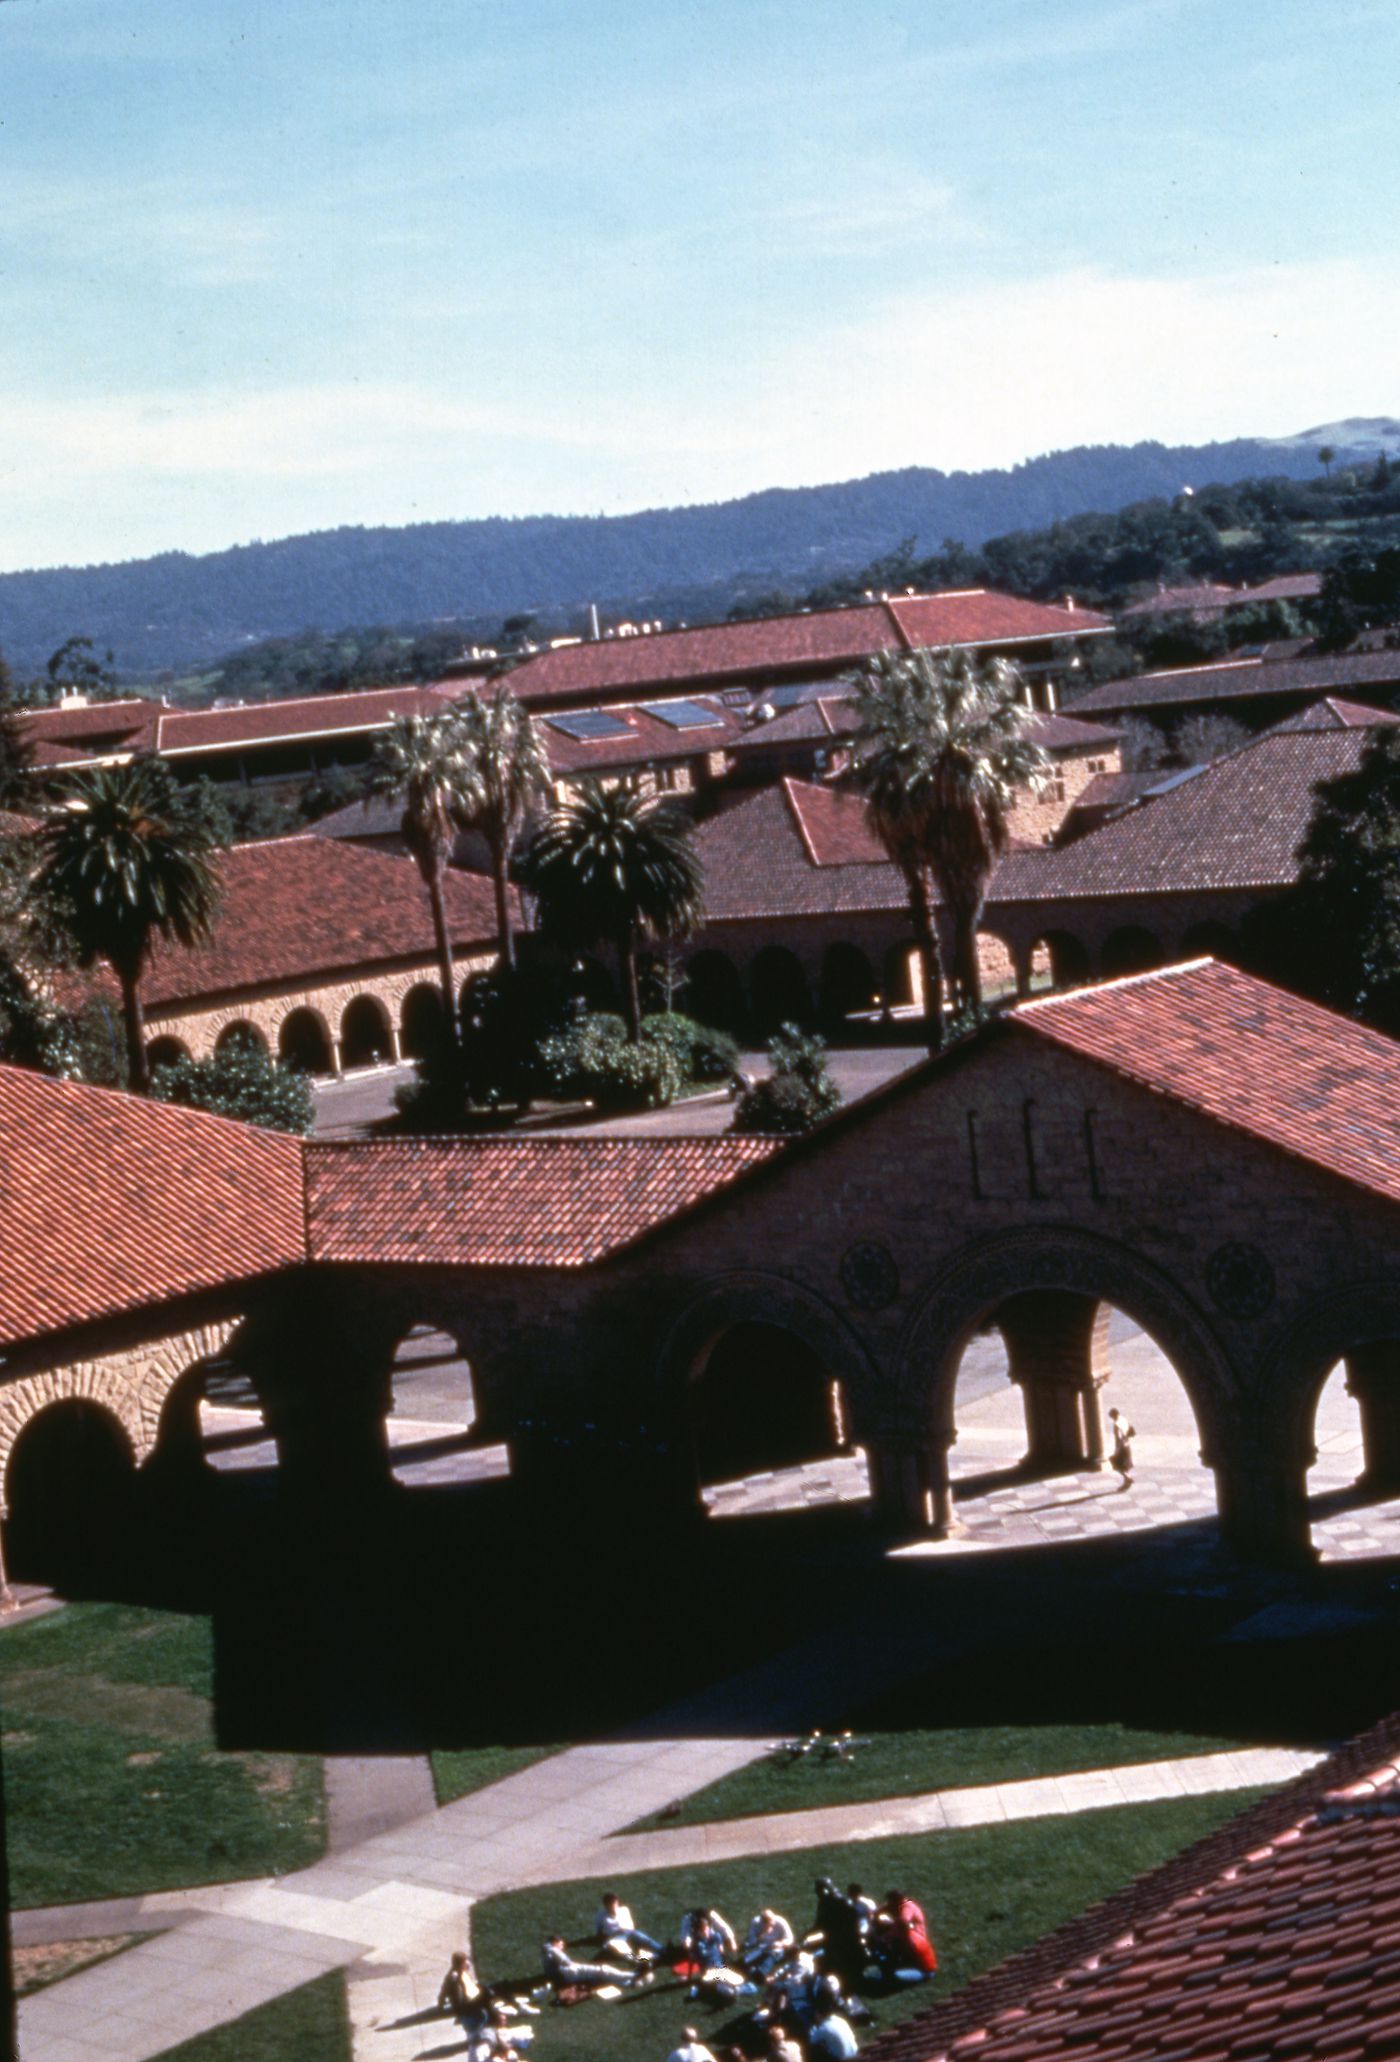 Photograph of Stanford University for research for Olmsted: L'origine del parco urbano e del parco naturale contemporaneo